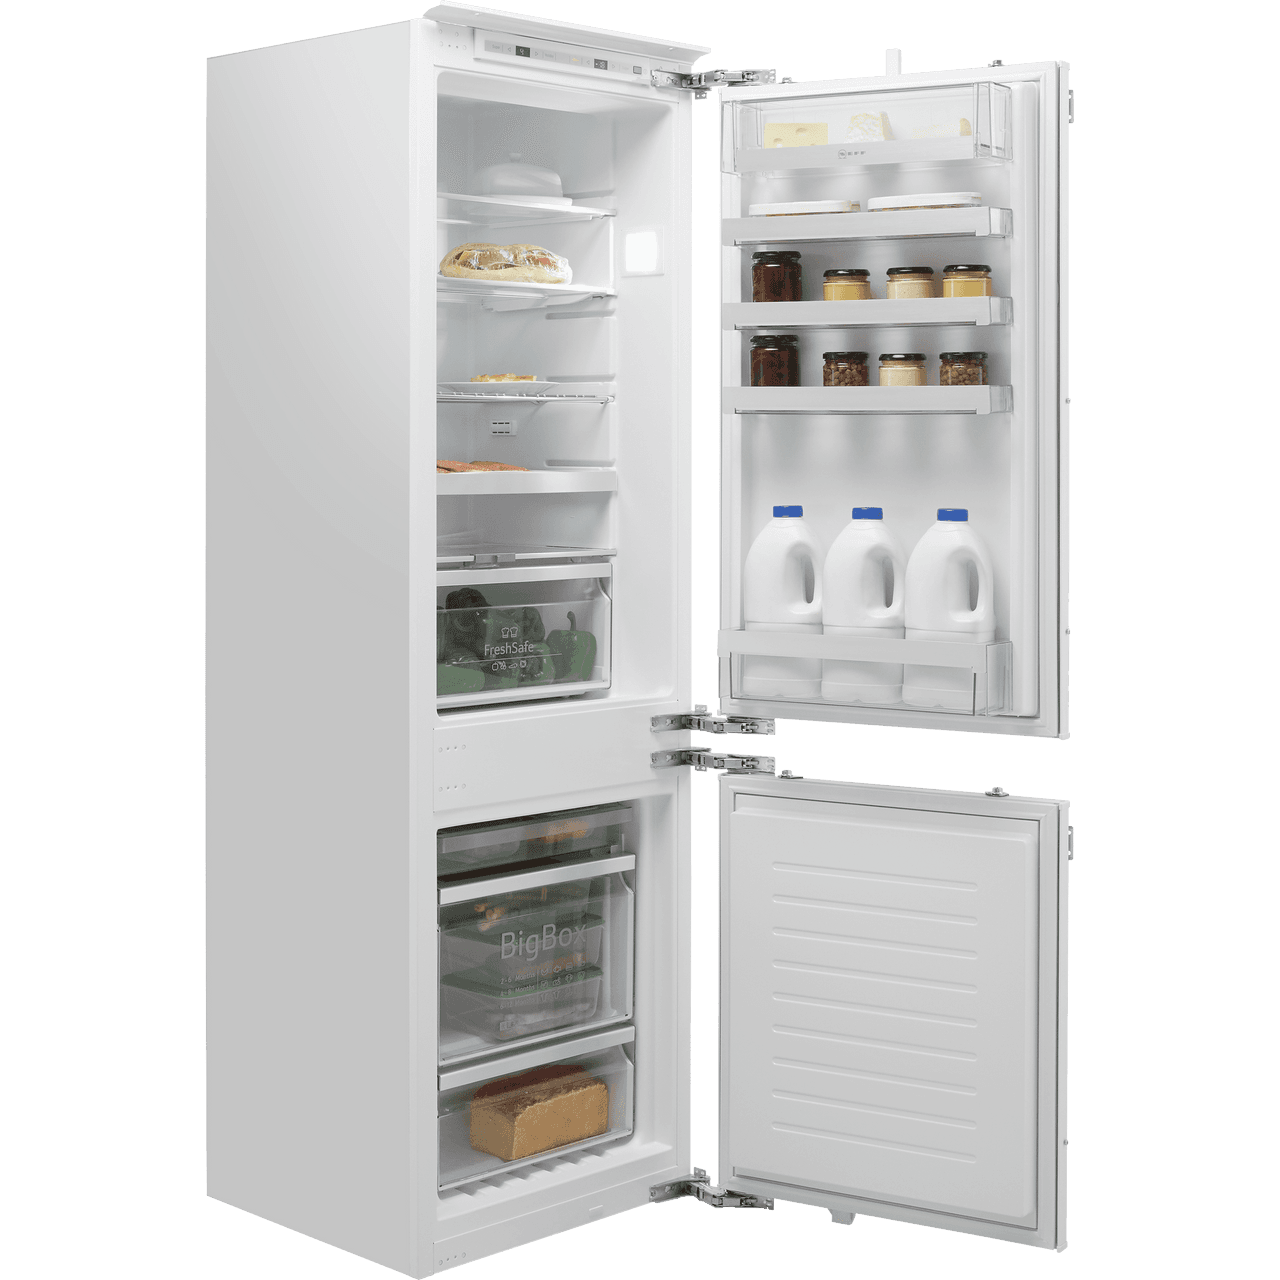 The Intelligent NEFF large fridge freezer combinations